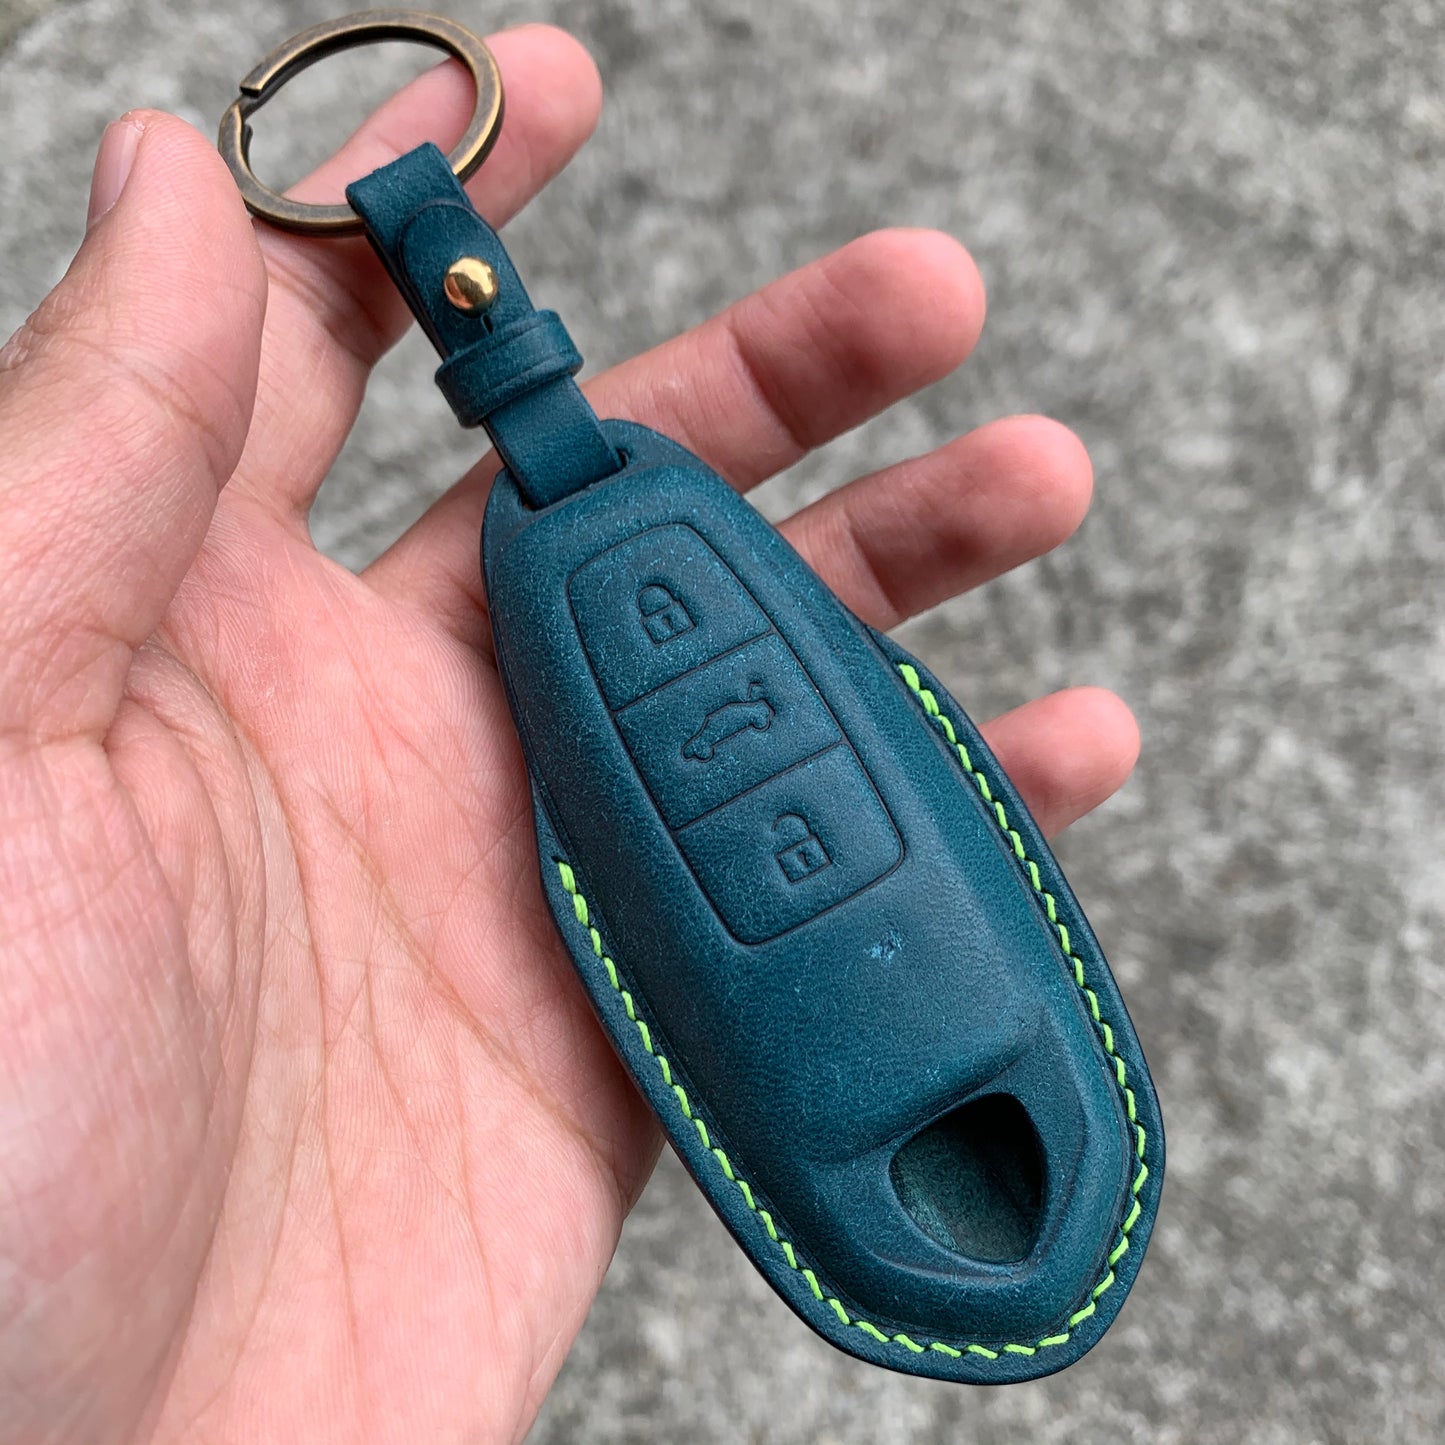 Lamborghini key fob cover, Pueblo leather